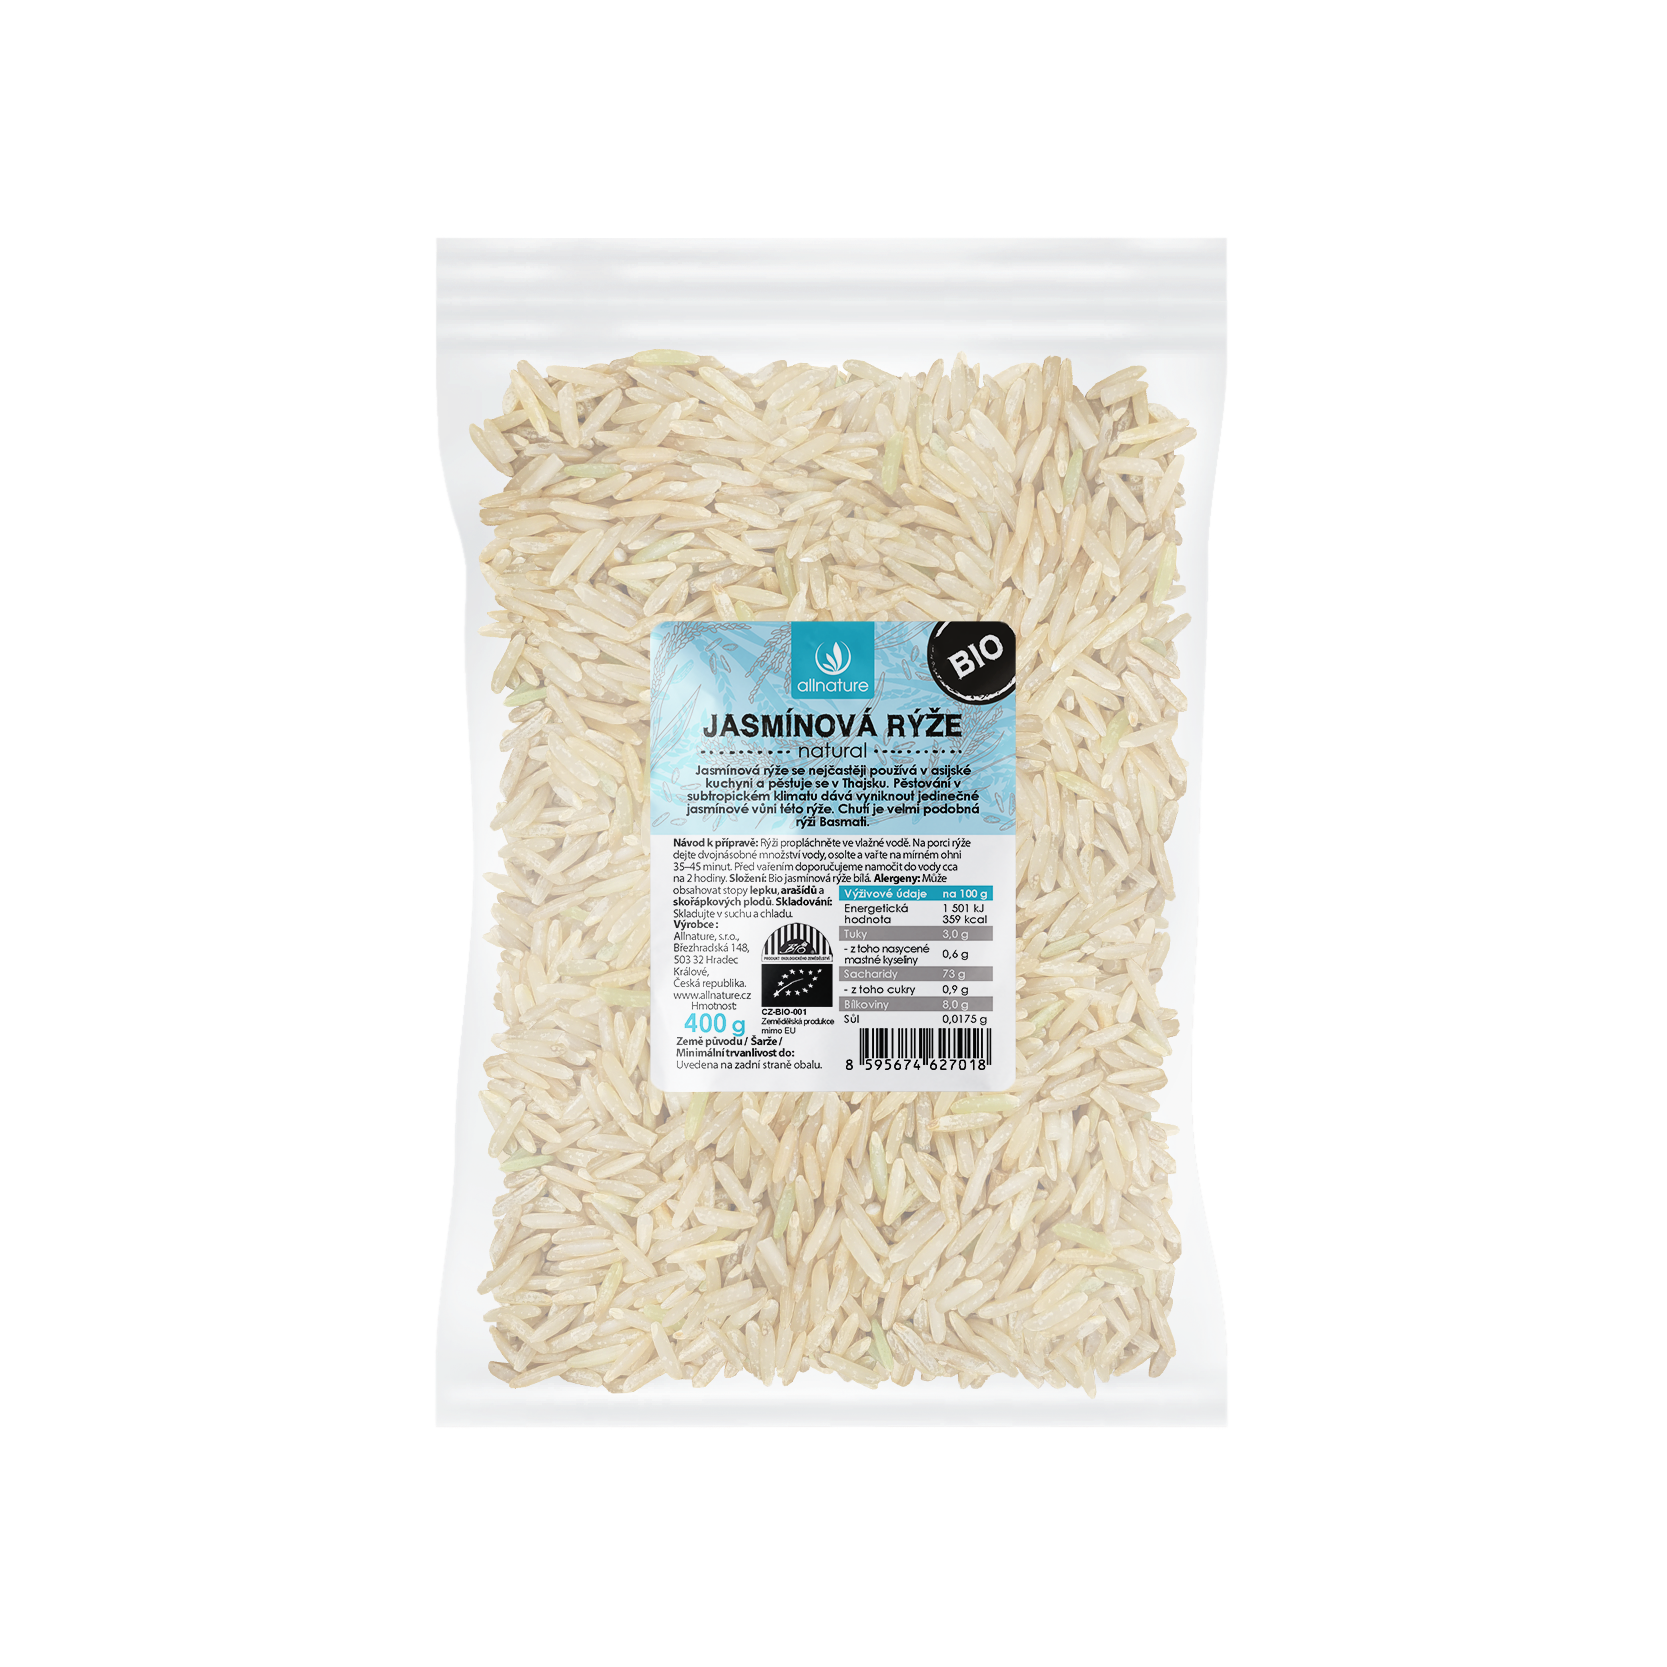 Jasmínová rýže natural BIO 400 g